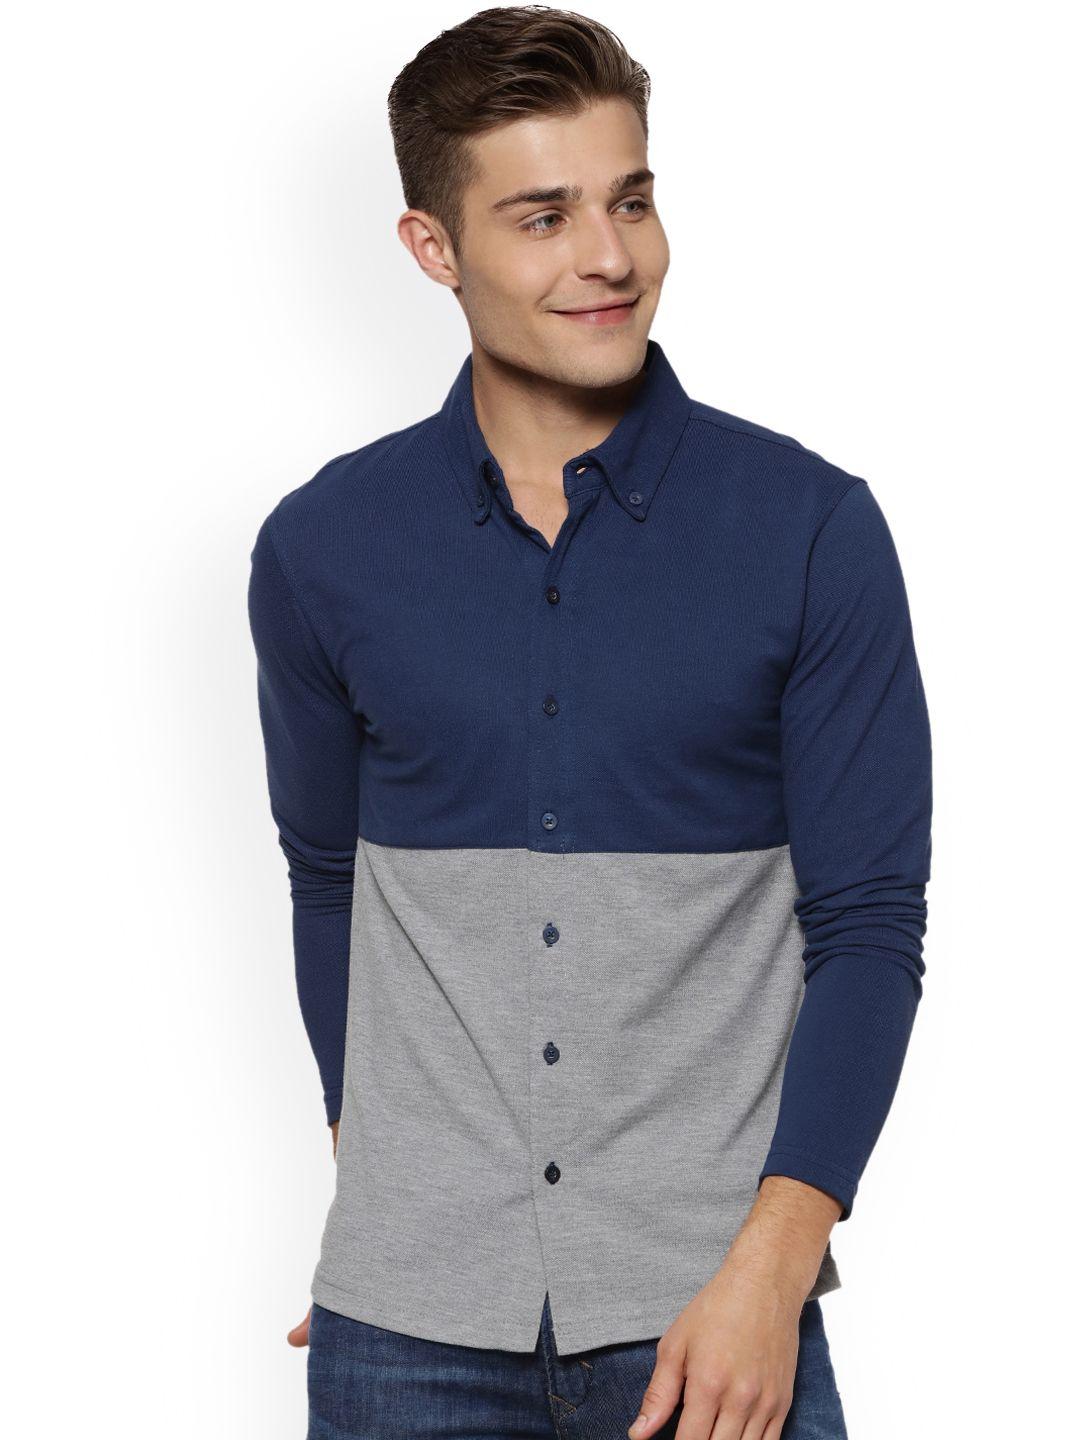 campus sutra men blue & grey regular fit colourblocked casual shirt